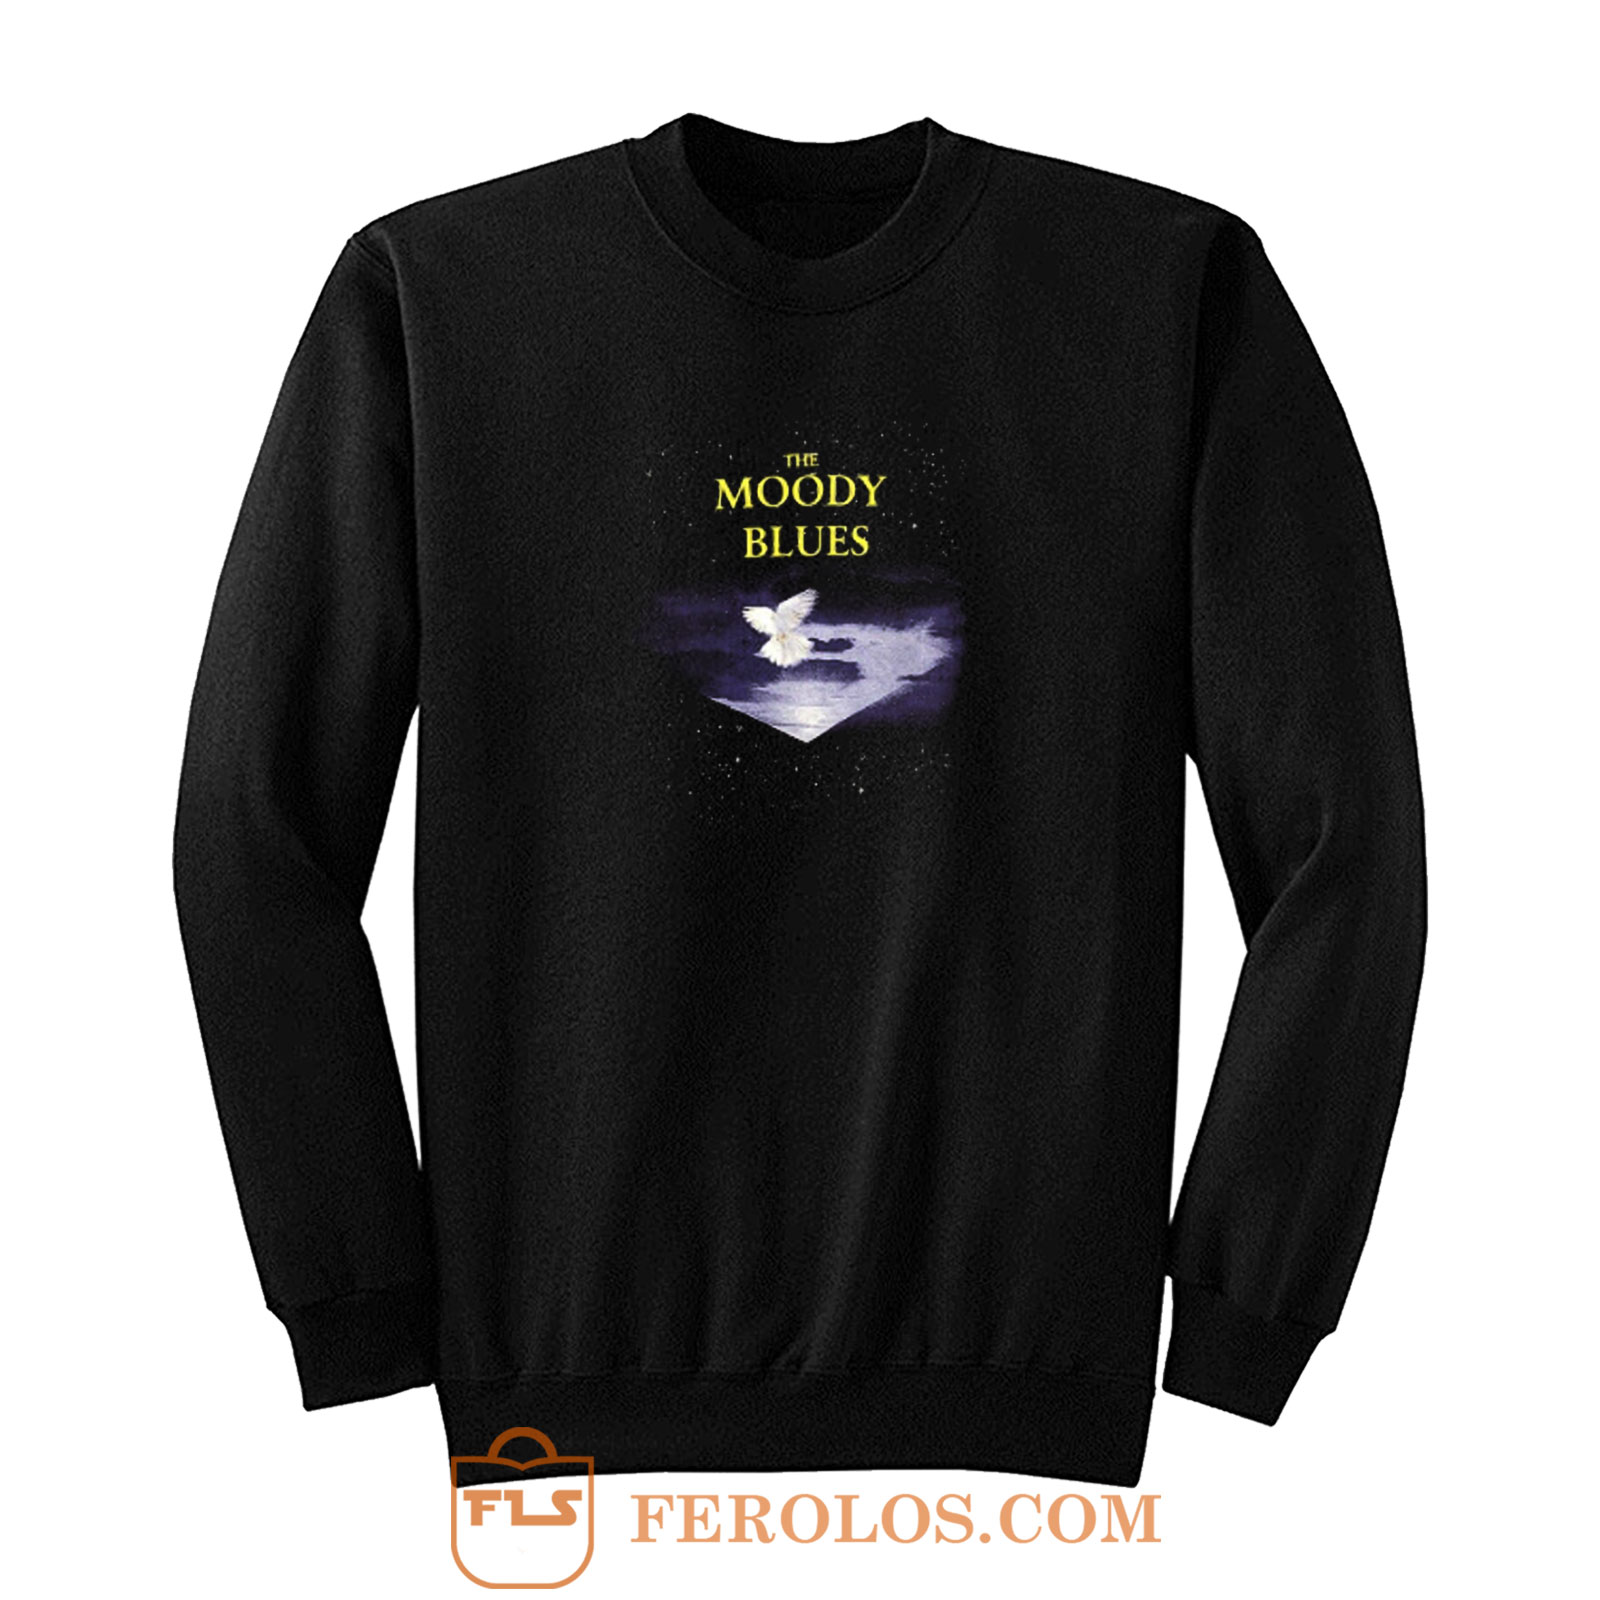 The Moody Blues Tour Sweatshirt | FEROLOS.COM